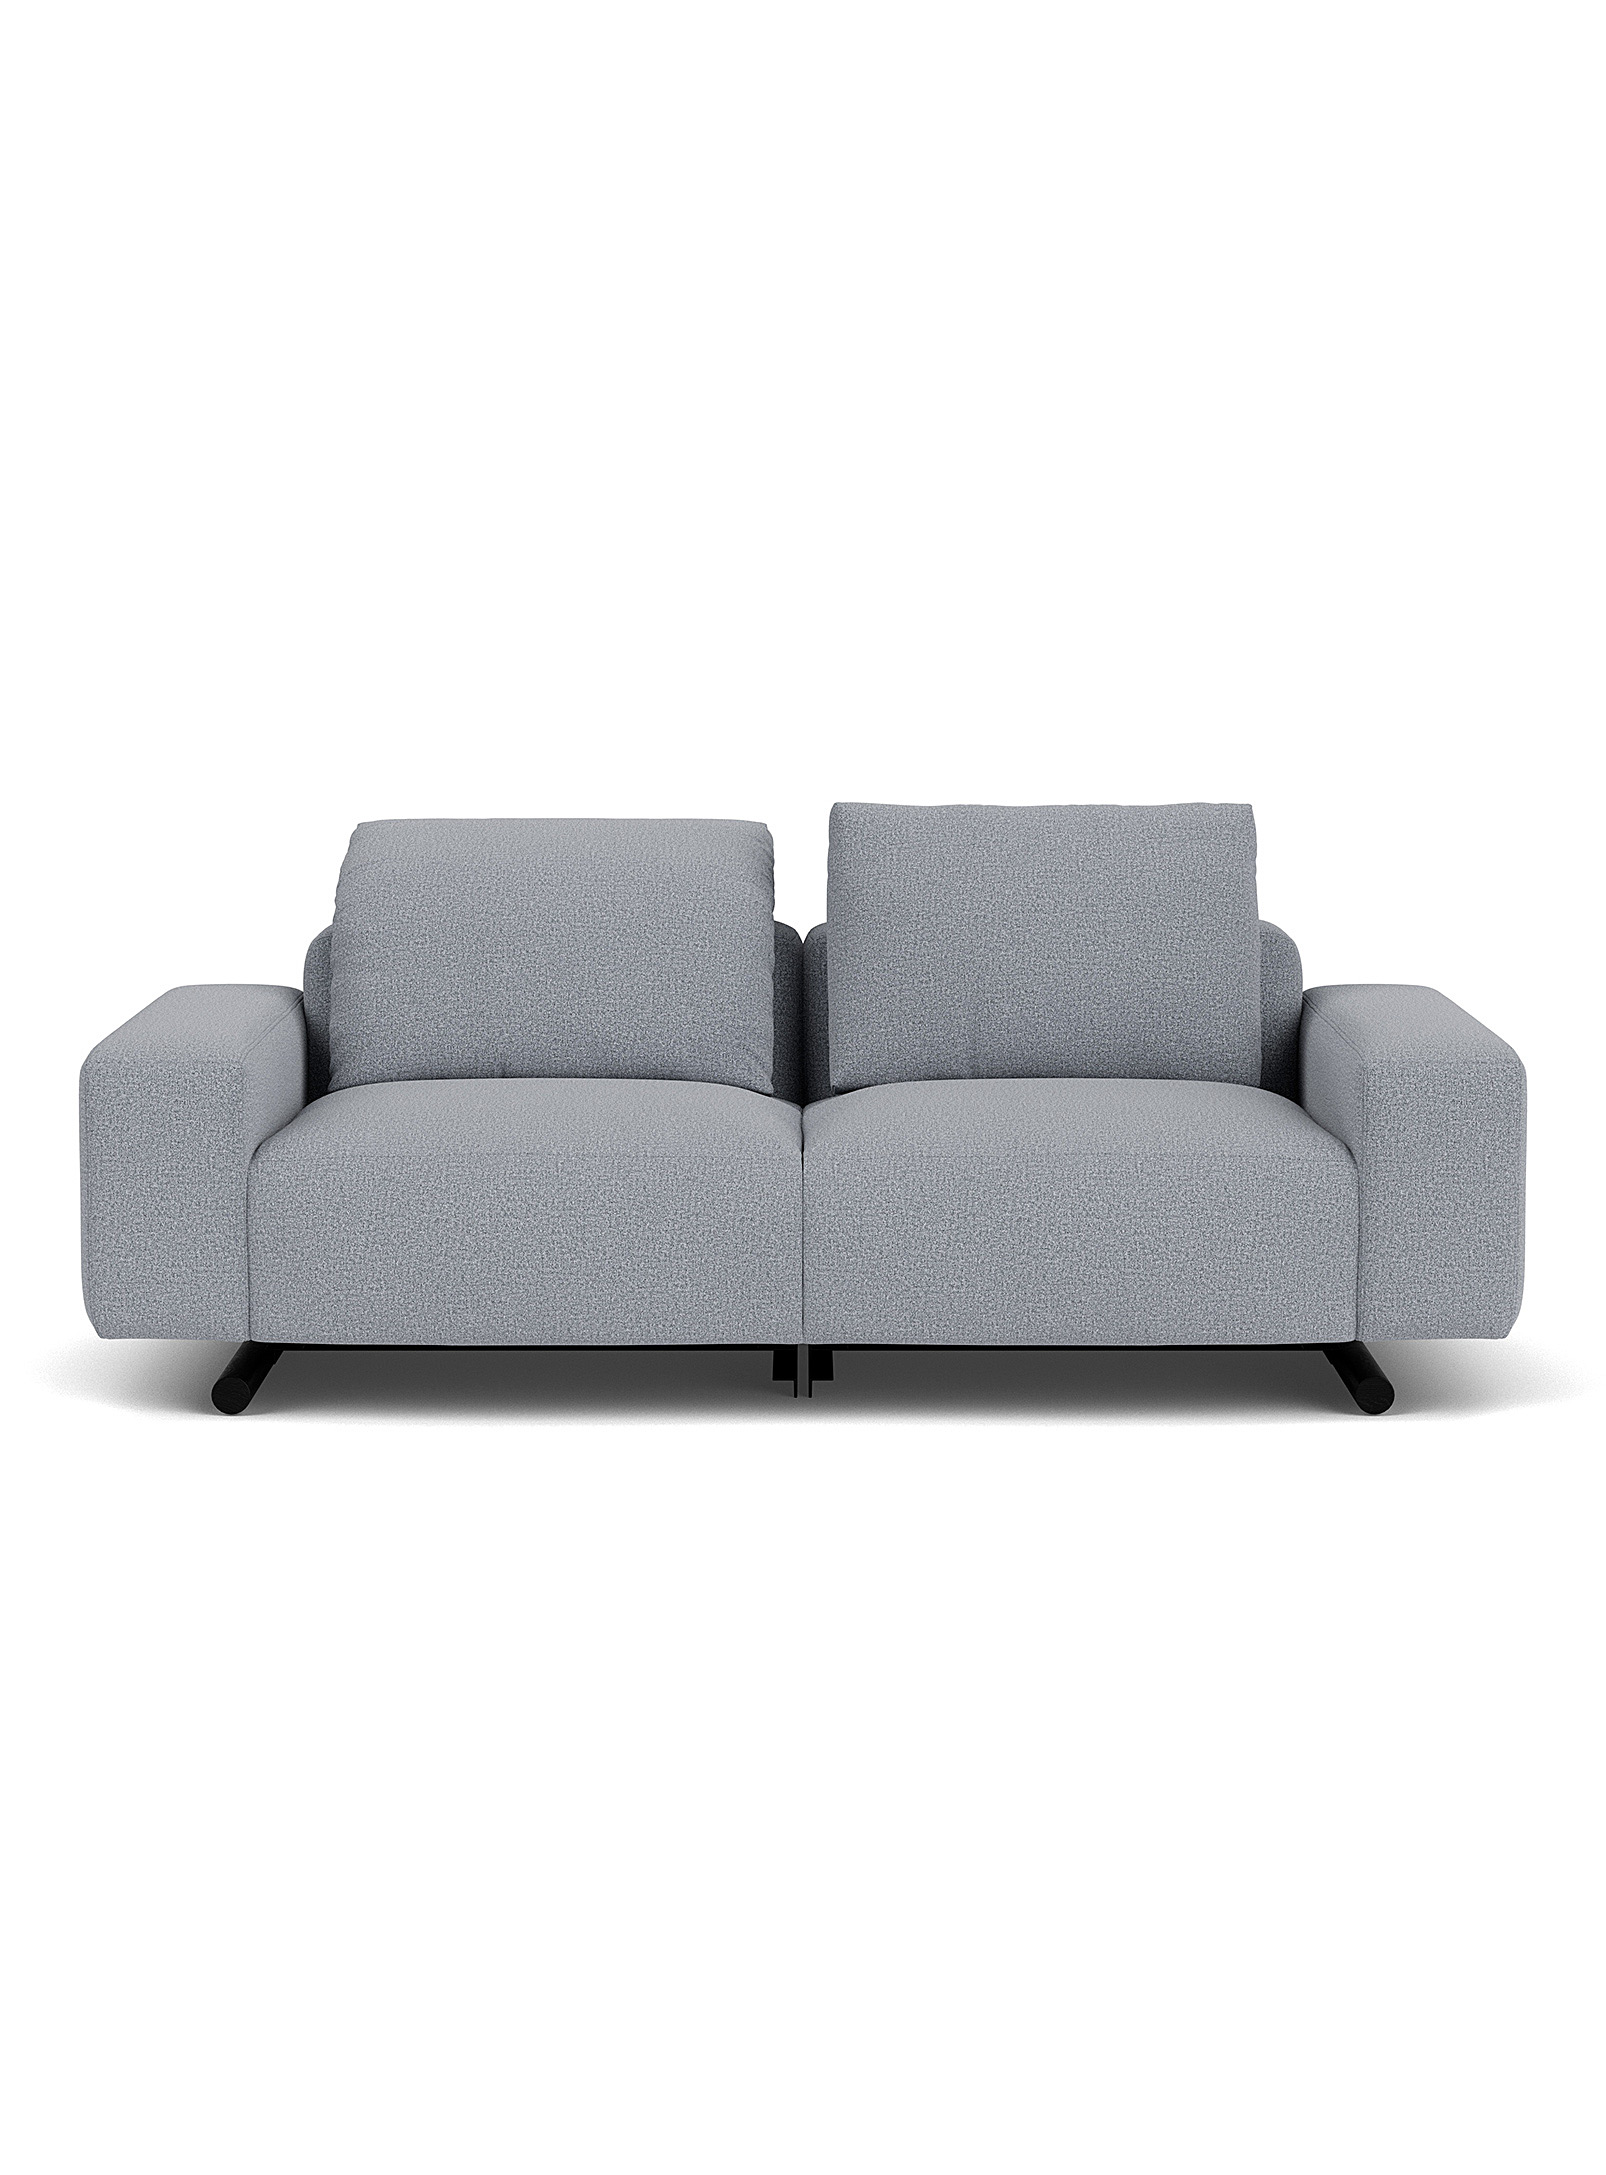 Eq3 Era Reclining Modular Couch In Light Grey